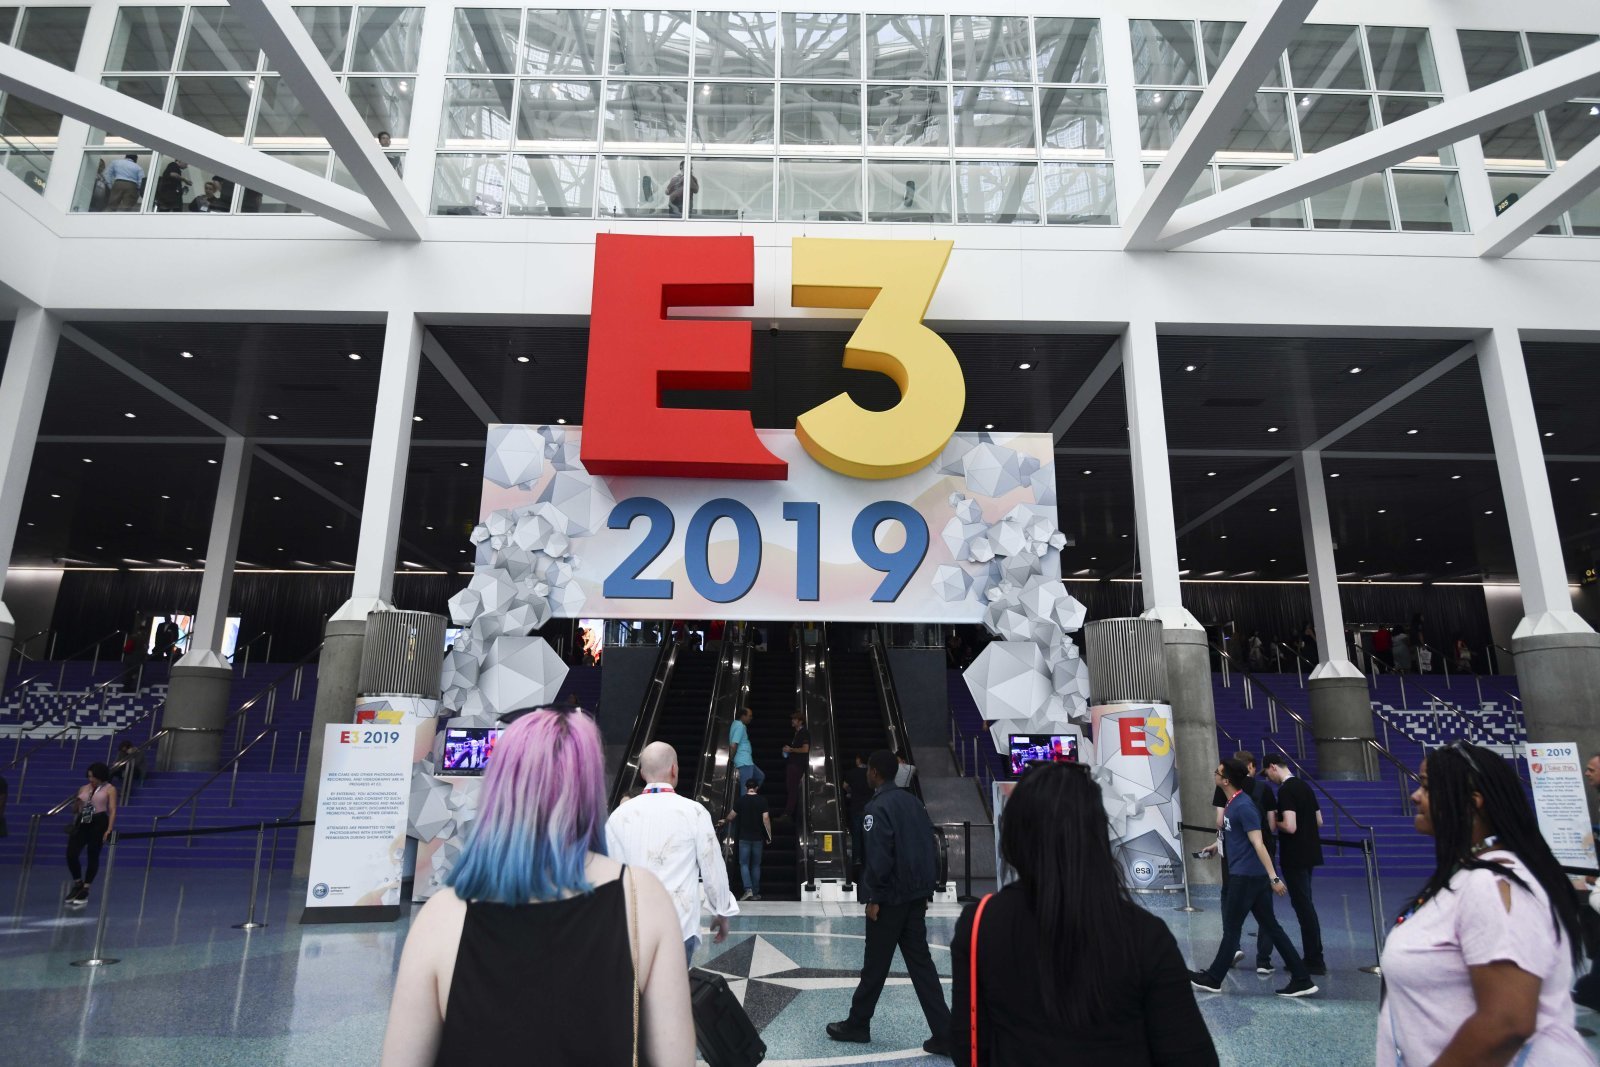 E3 2020 has been canceled due to coronavirus fears. Image via Engadget.